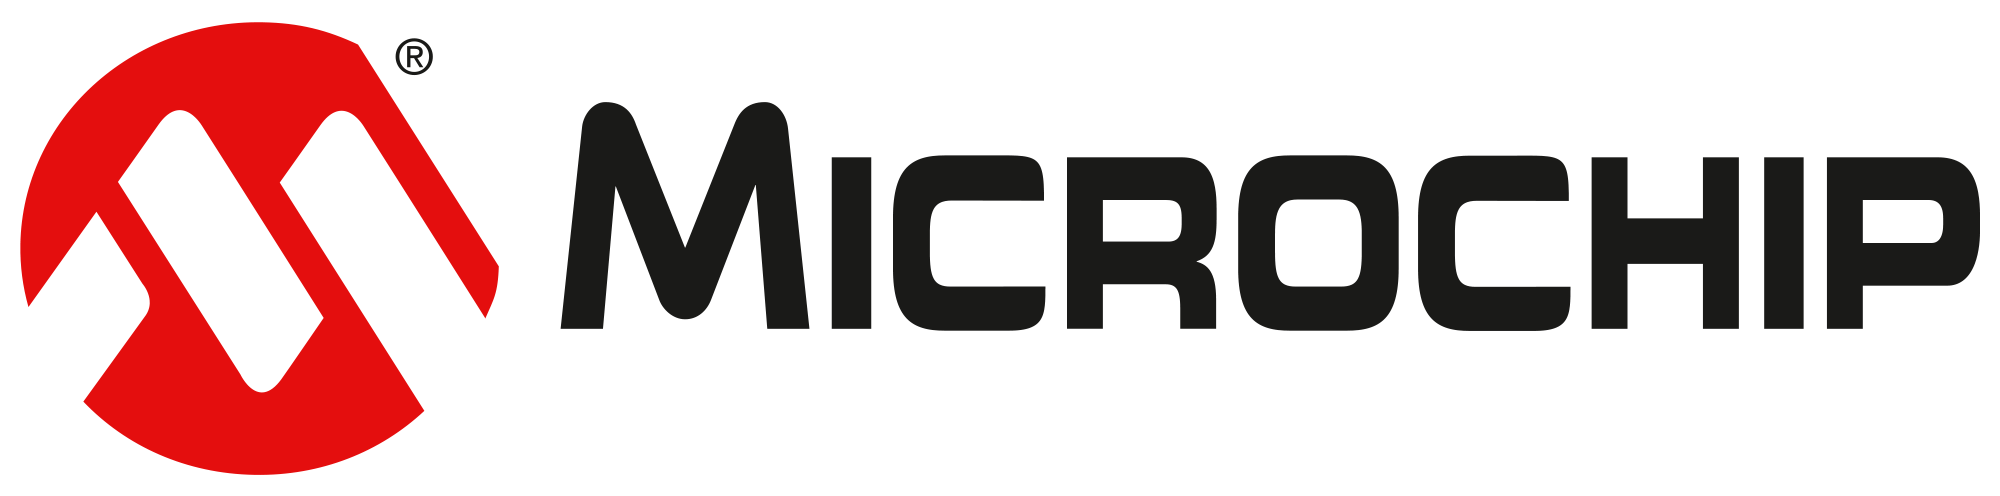 Logo microchip proveedores participantes AAD2022